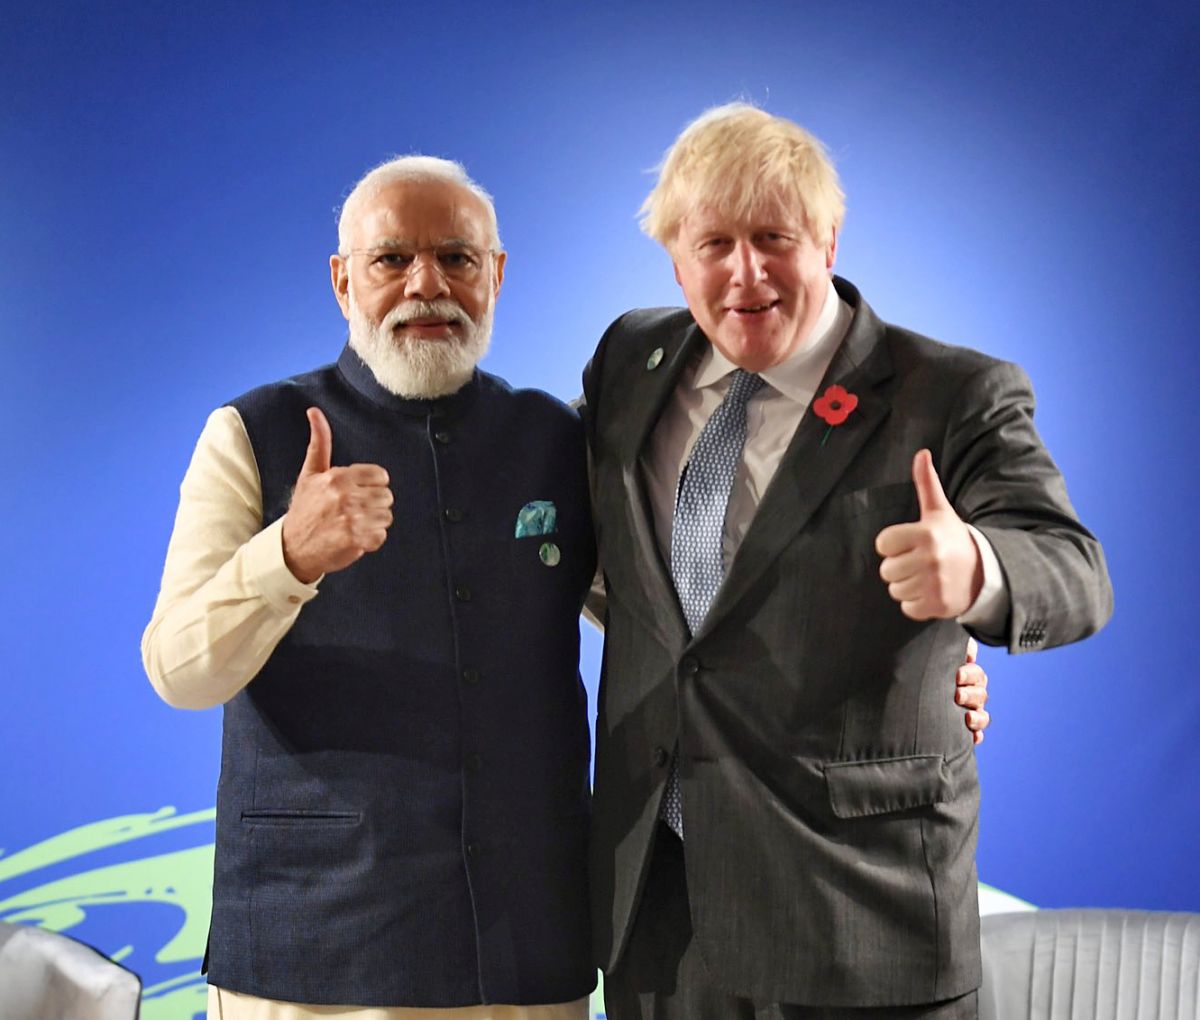 Boris Johnson may visit India next week for FTA talks